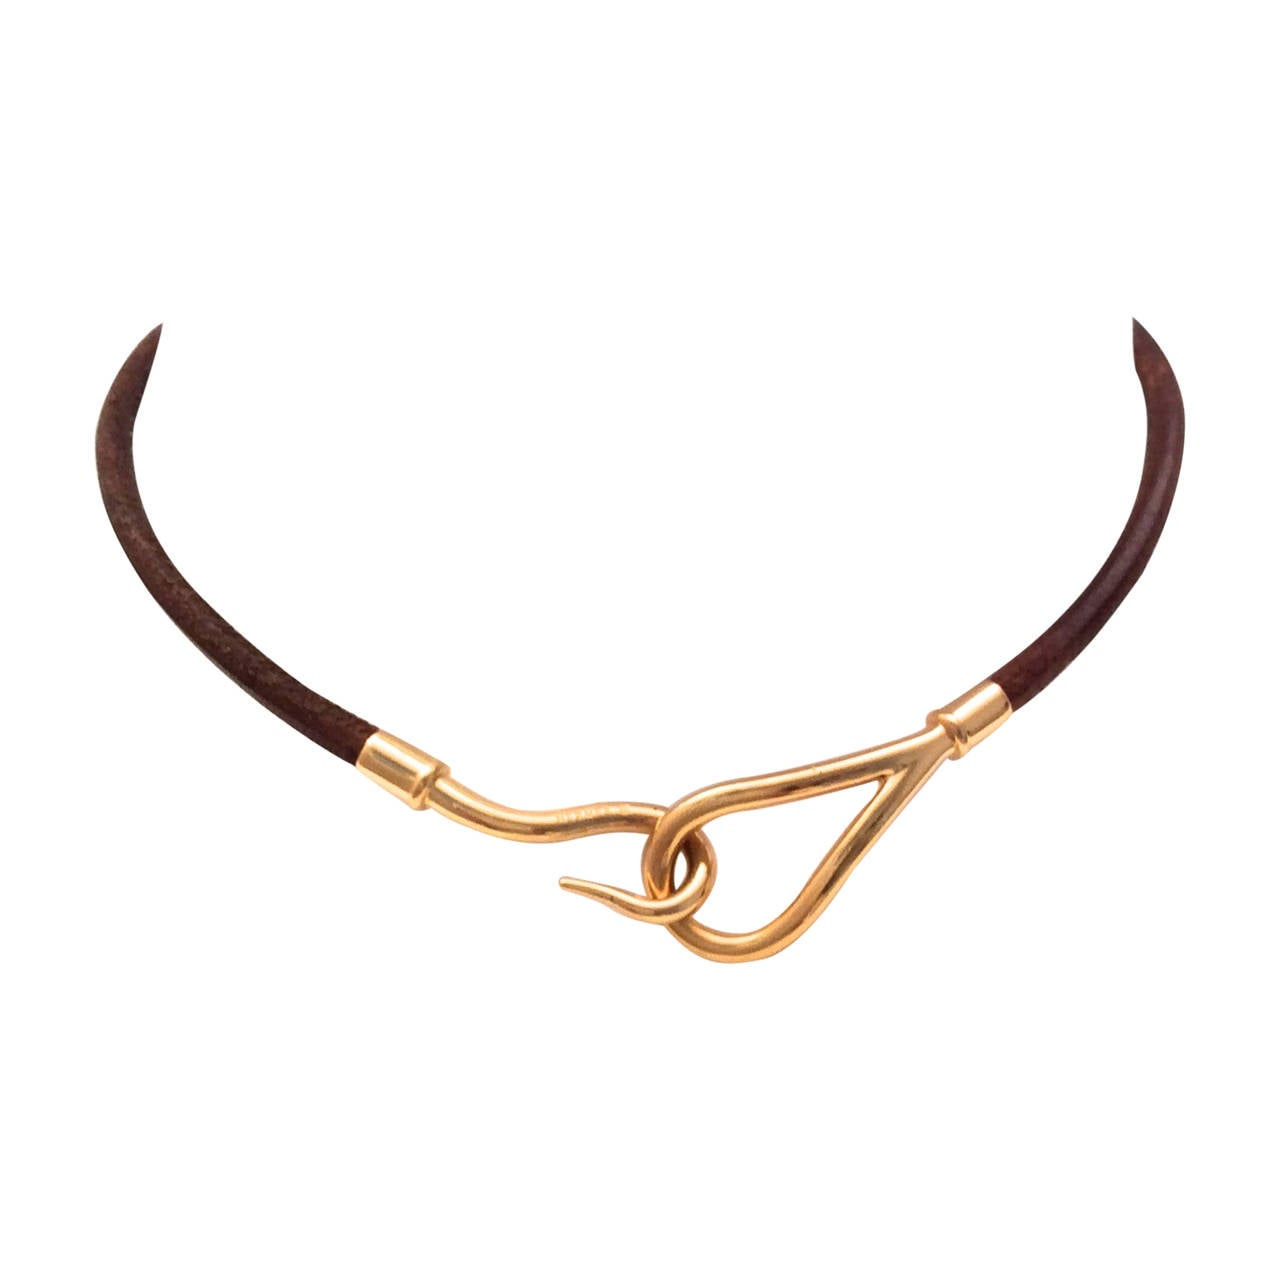 Hermes Necklace / Bracelet